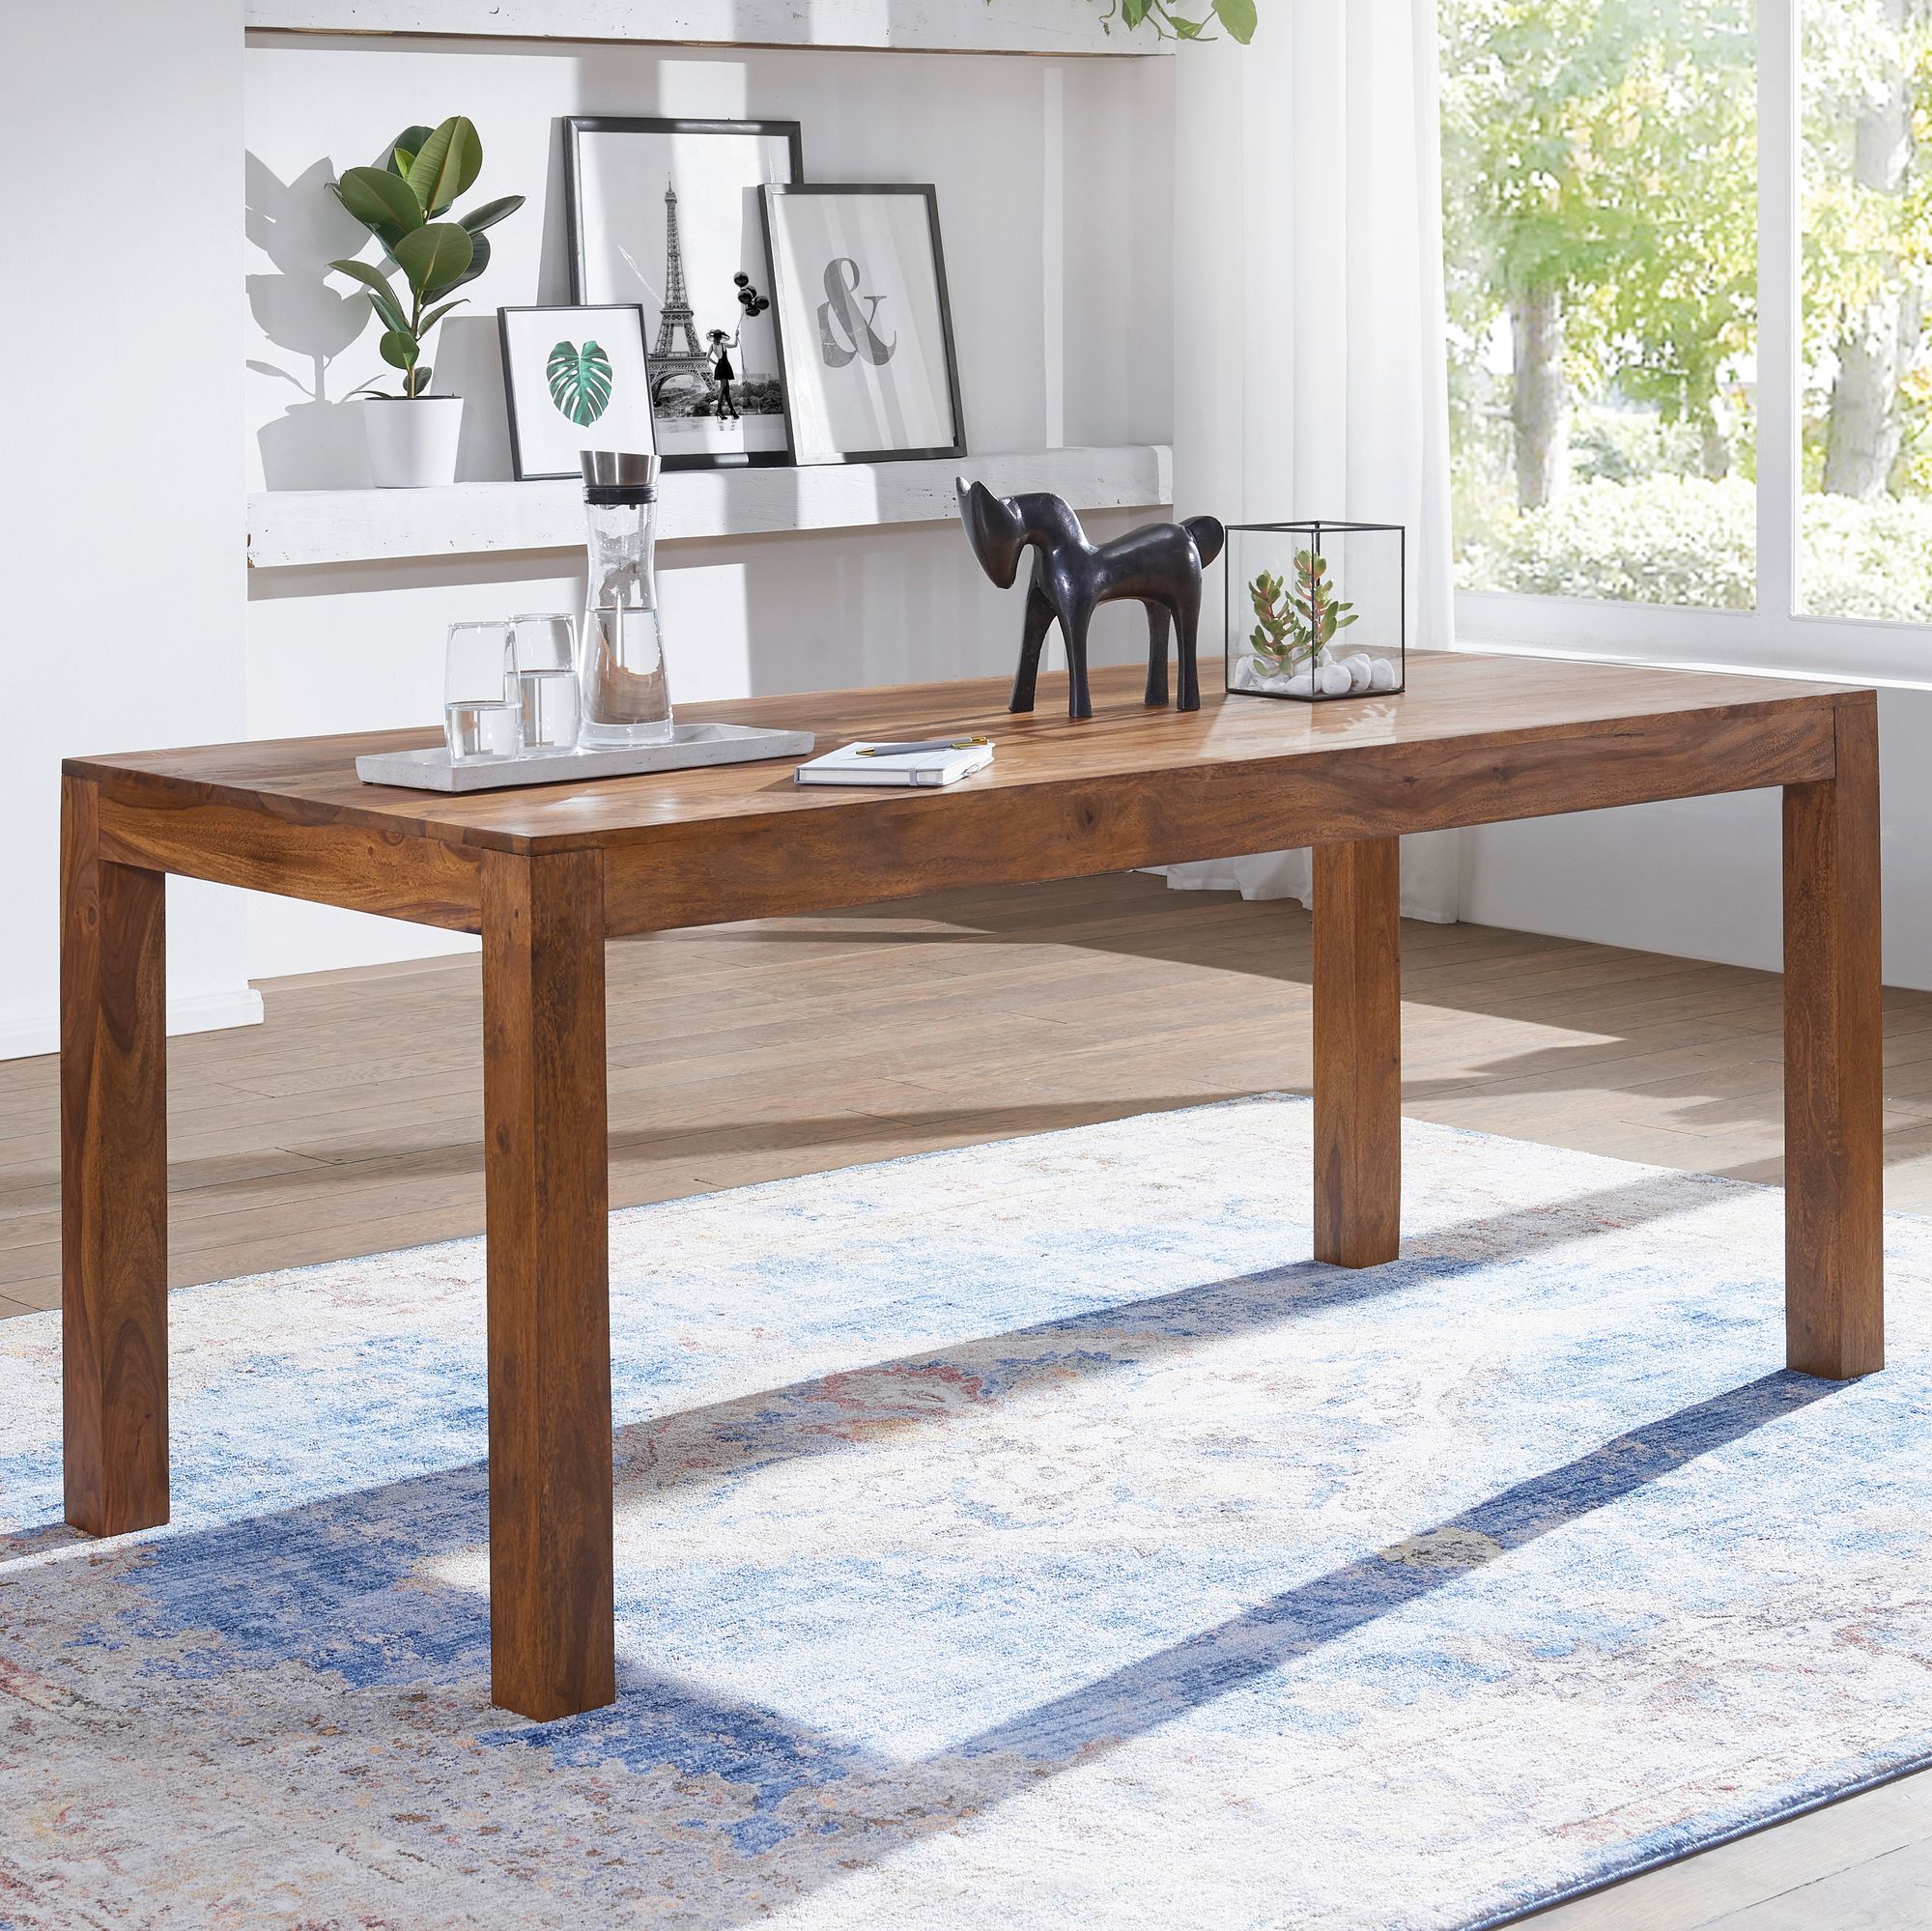 Nancy's Coriscana Dining Table - Dining room table - Solid Wood - 140 x 80 cm - Brown - Sheesham - Handmade - FSC 